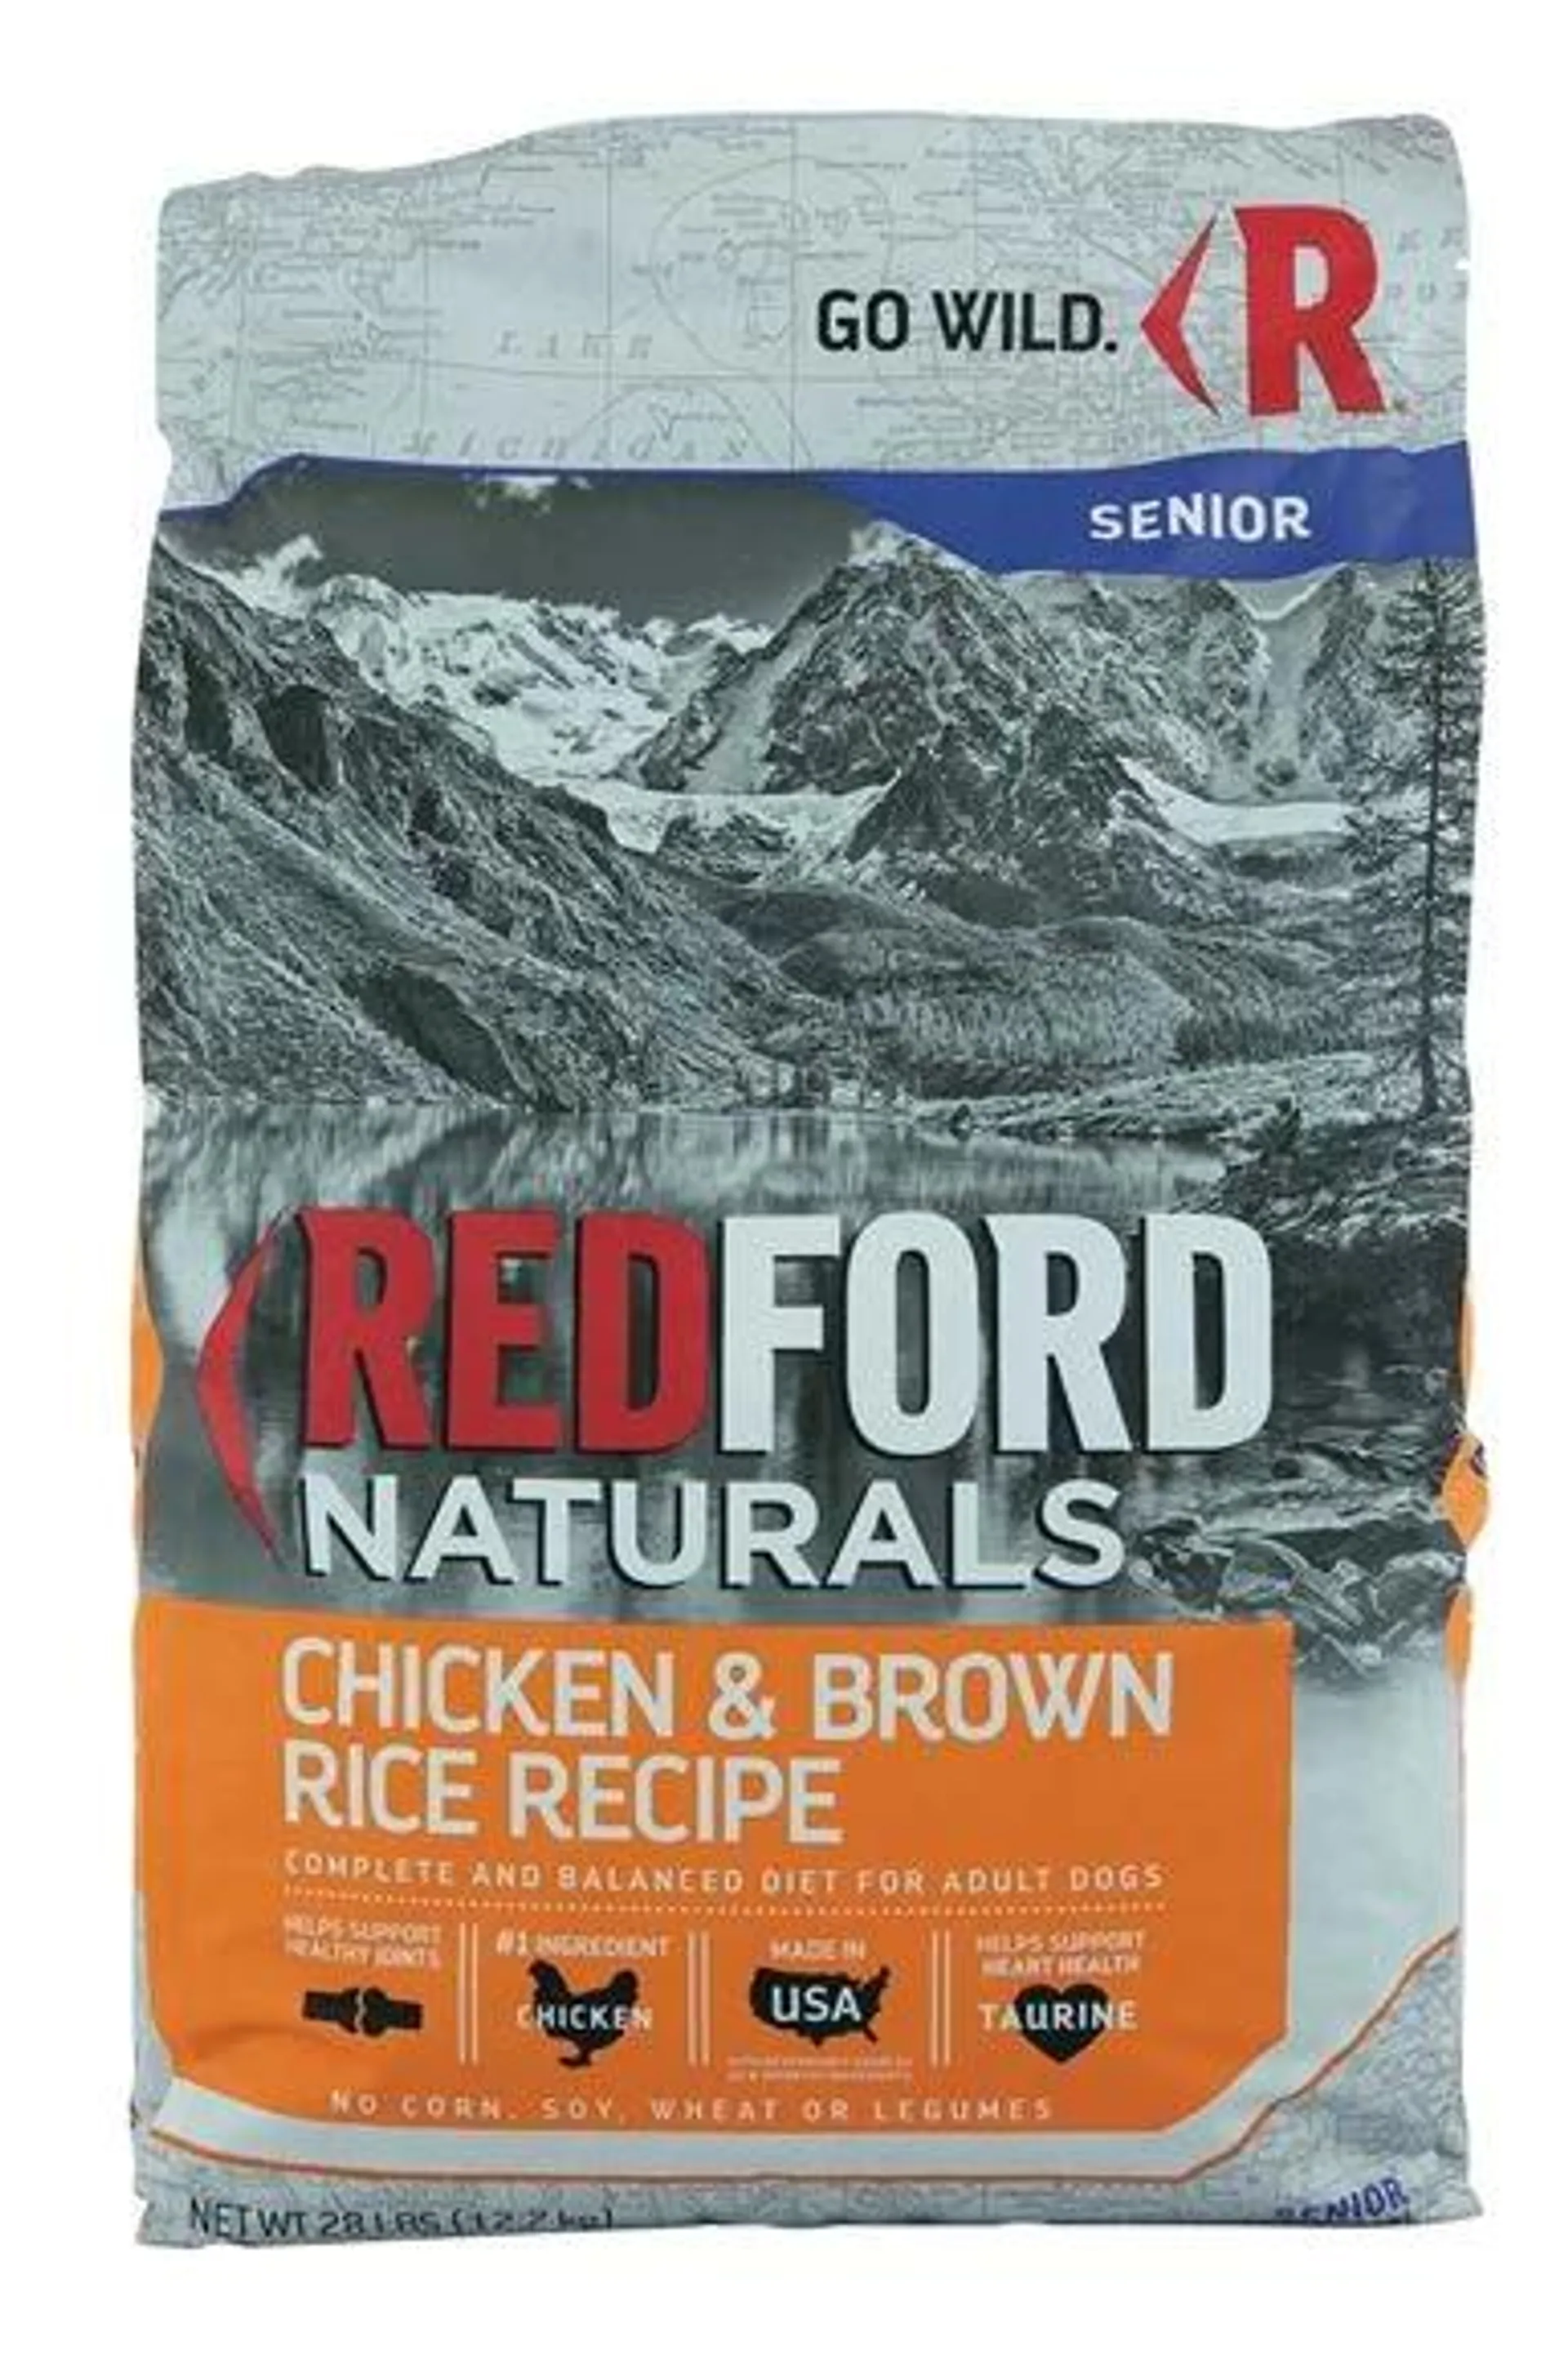 Redford Naturals Senior Chicken & Brown Rice Recipe Dog Food, 28 Pounds